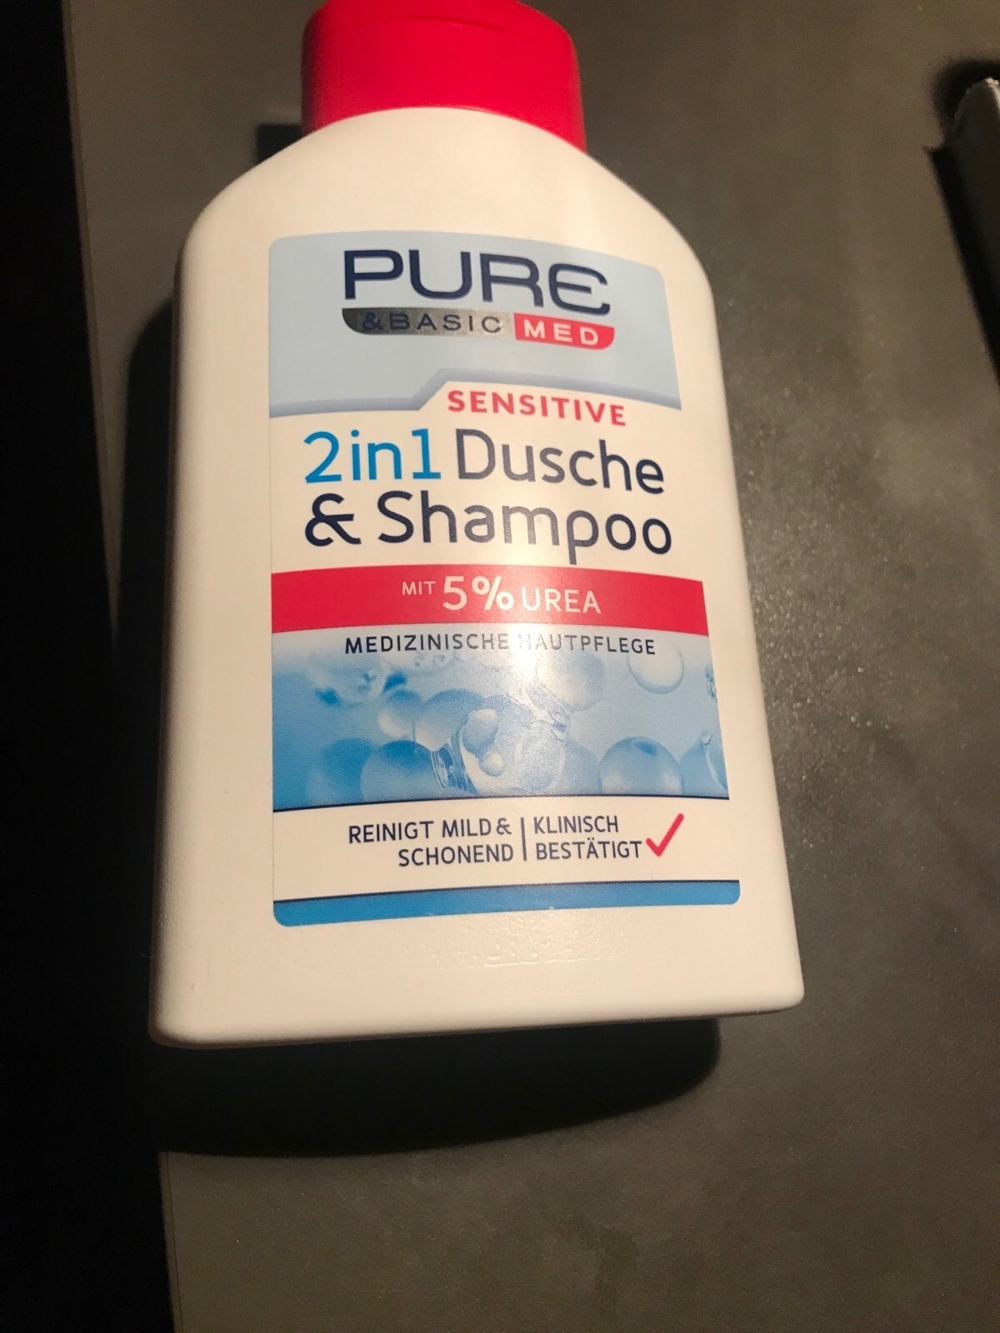 Pure & Basic Med Sensitive 2in1 Dusche & Shampoo mit 5% Urea